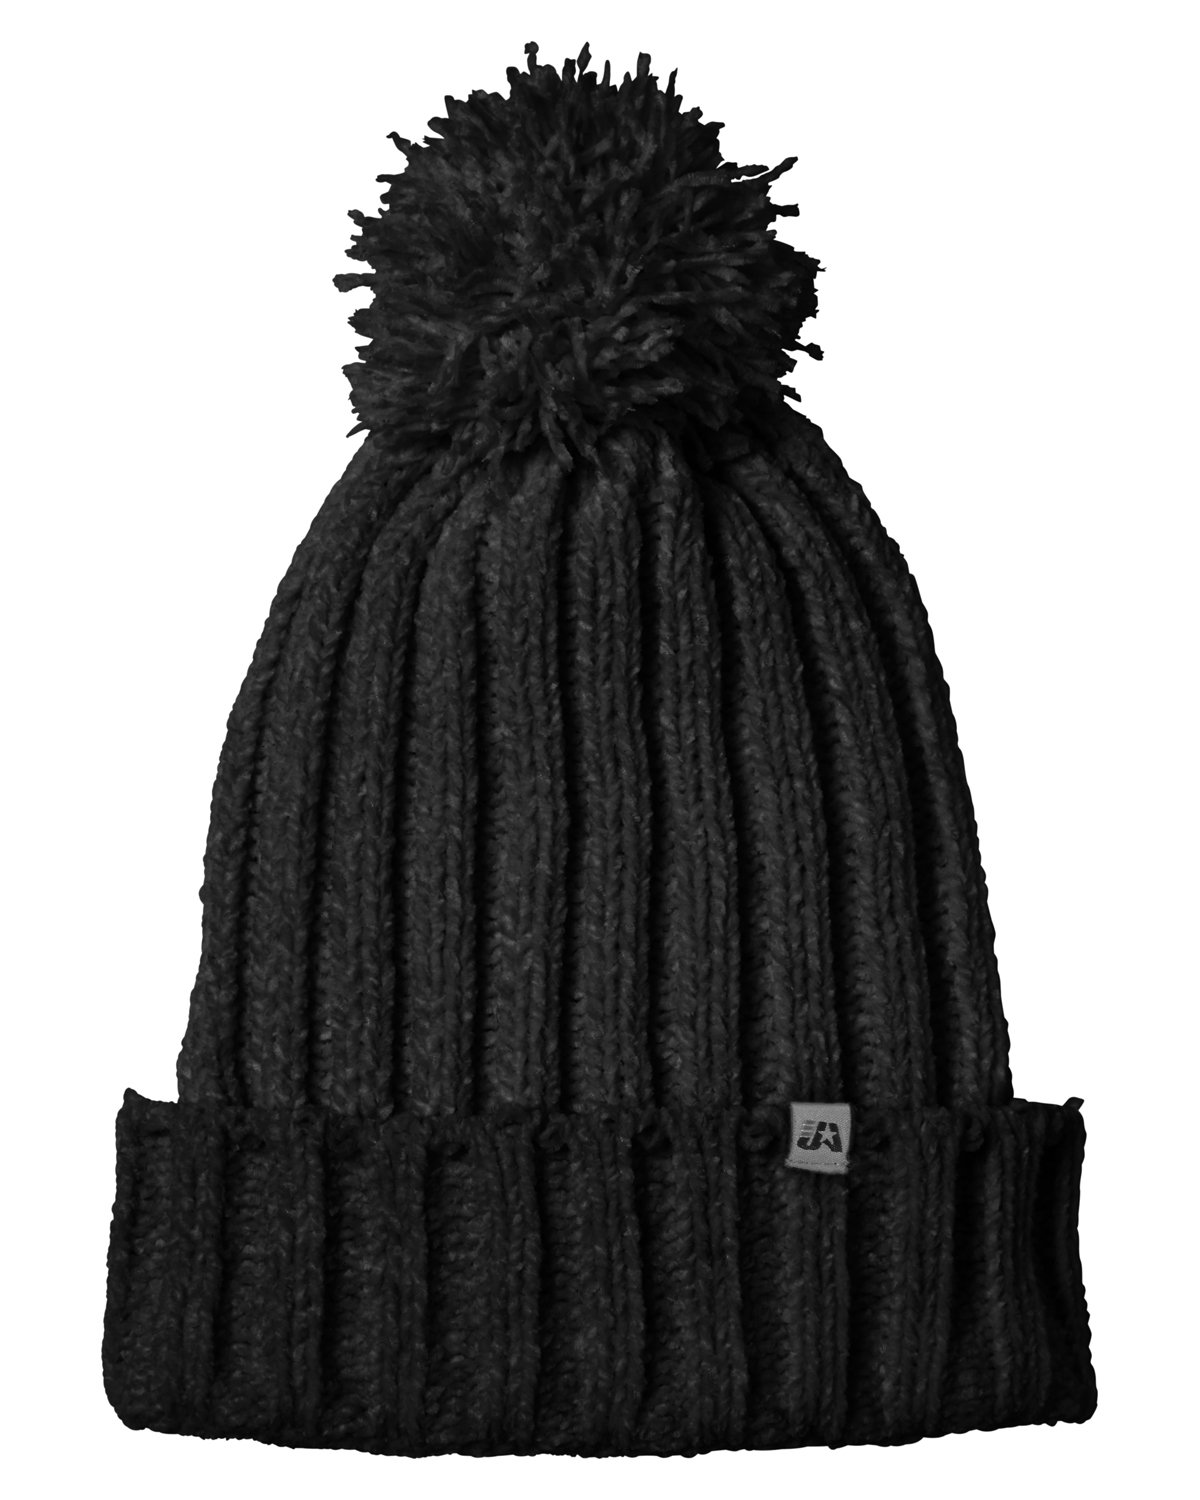 J. America 5008 - Cushy Knit Hat